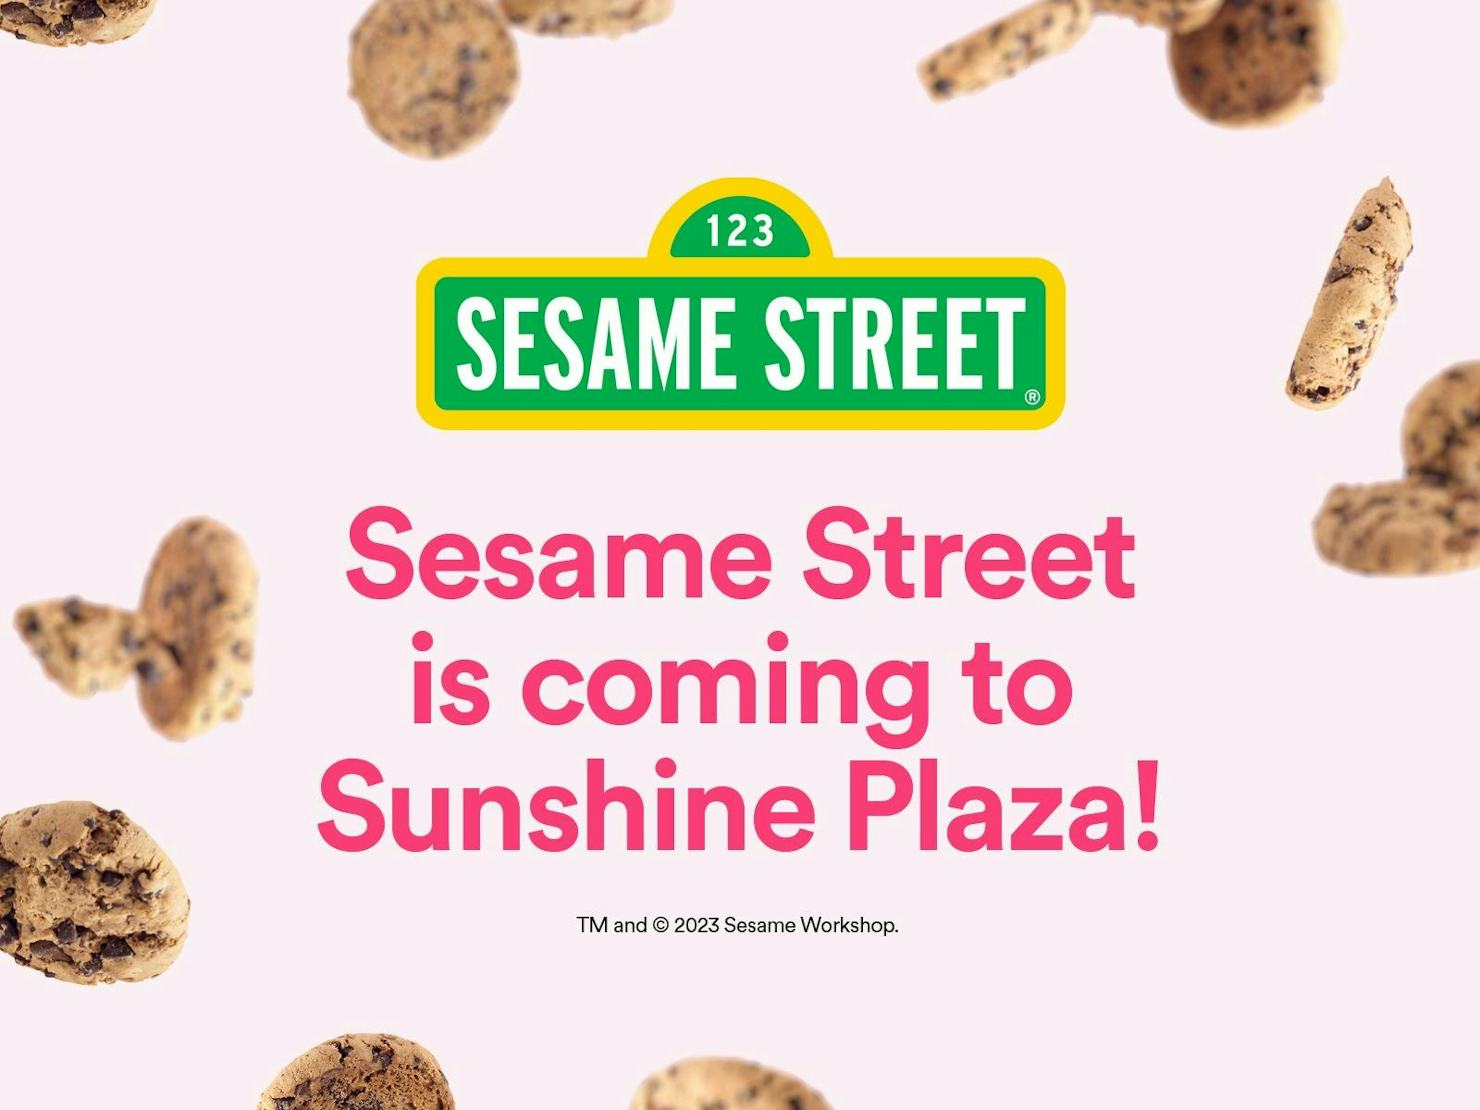 Sesame Street arrives at Sunshine Plaza